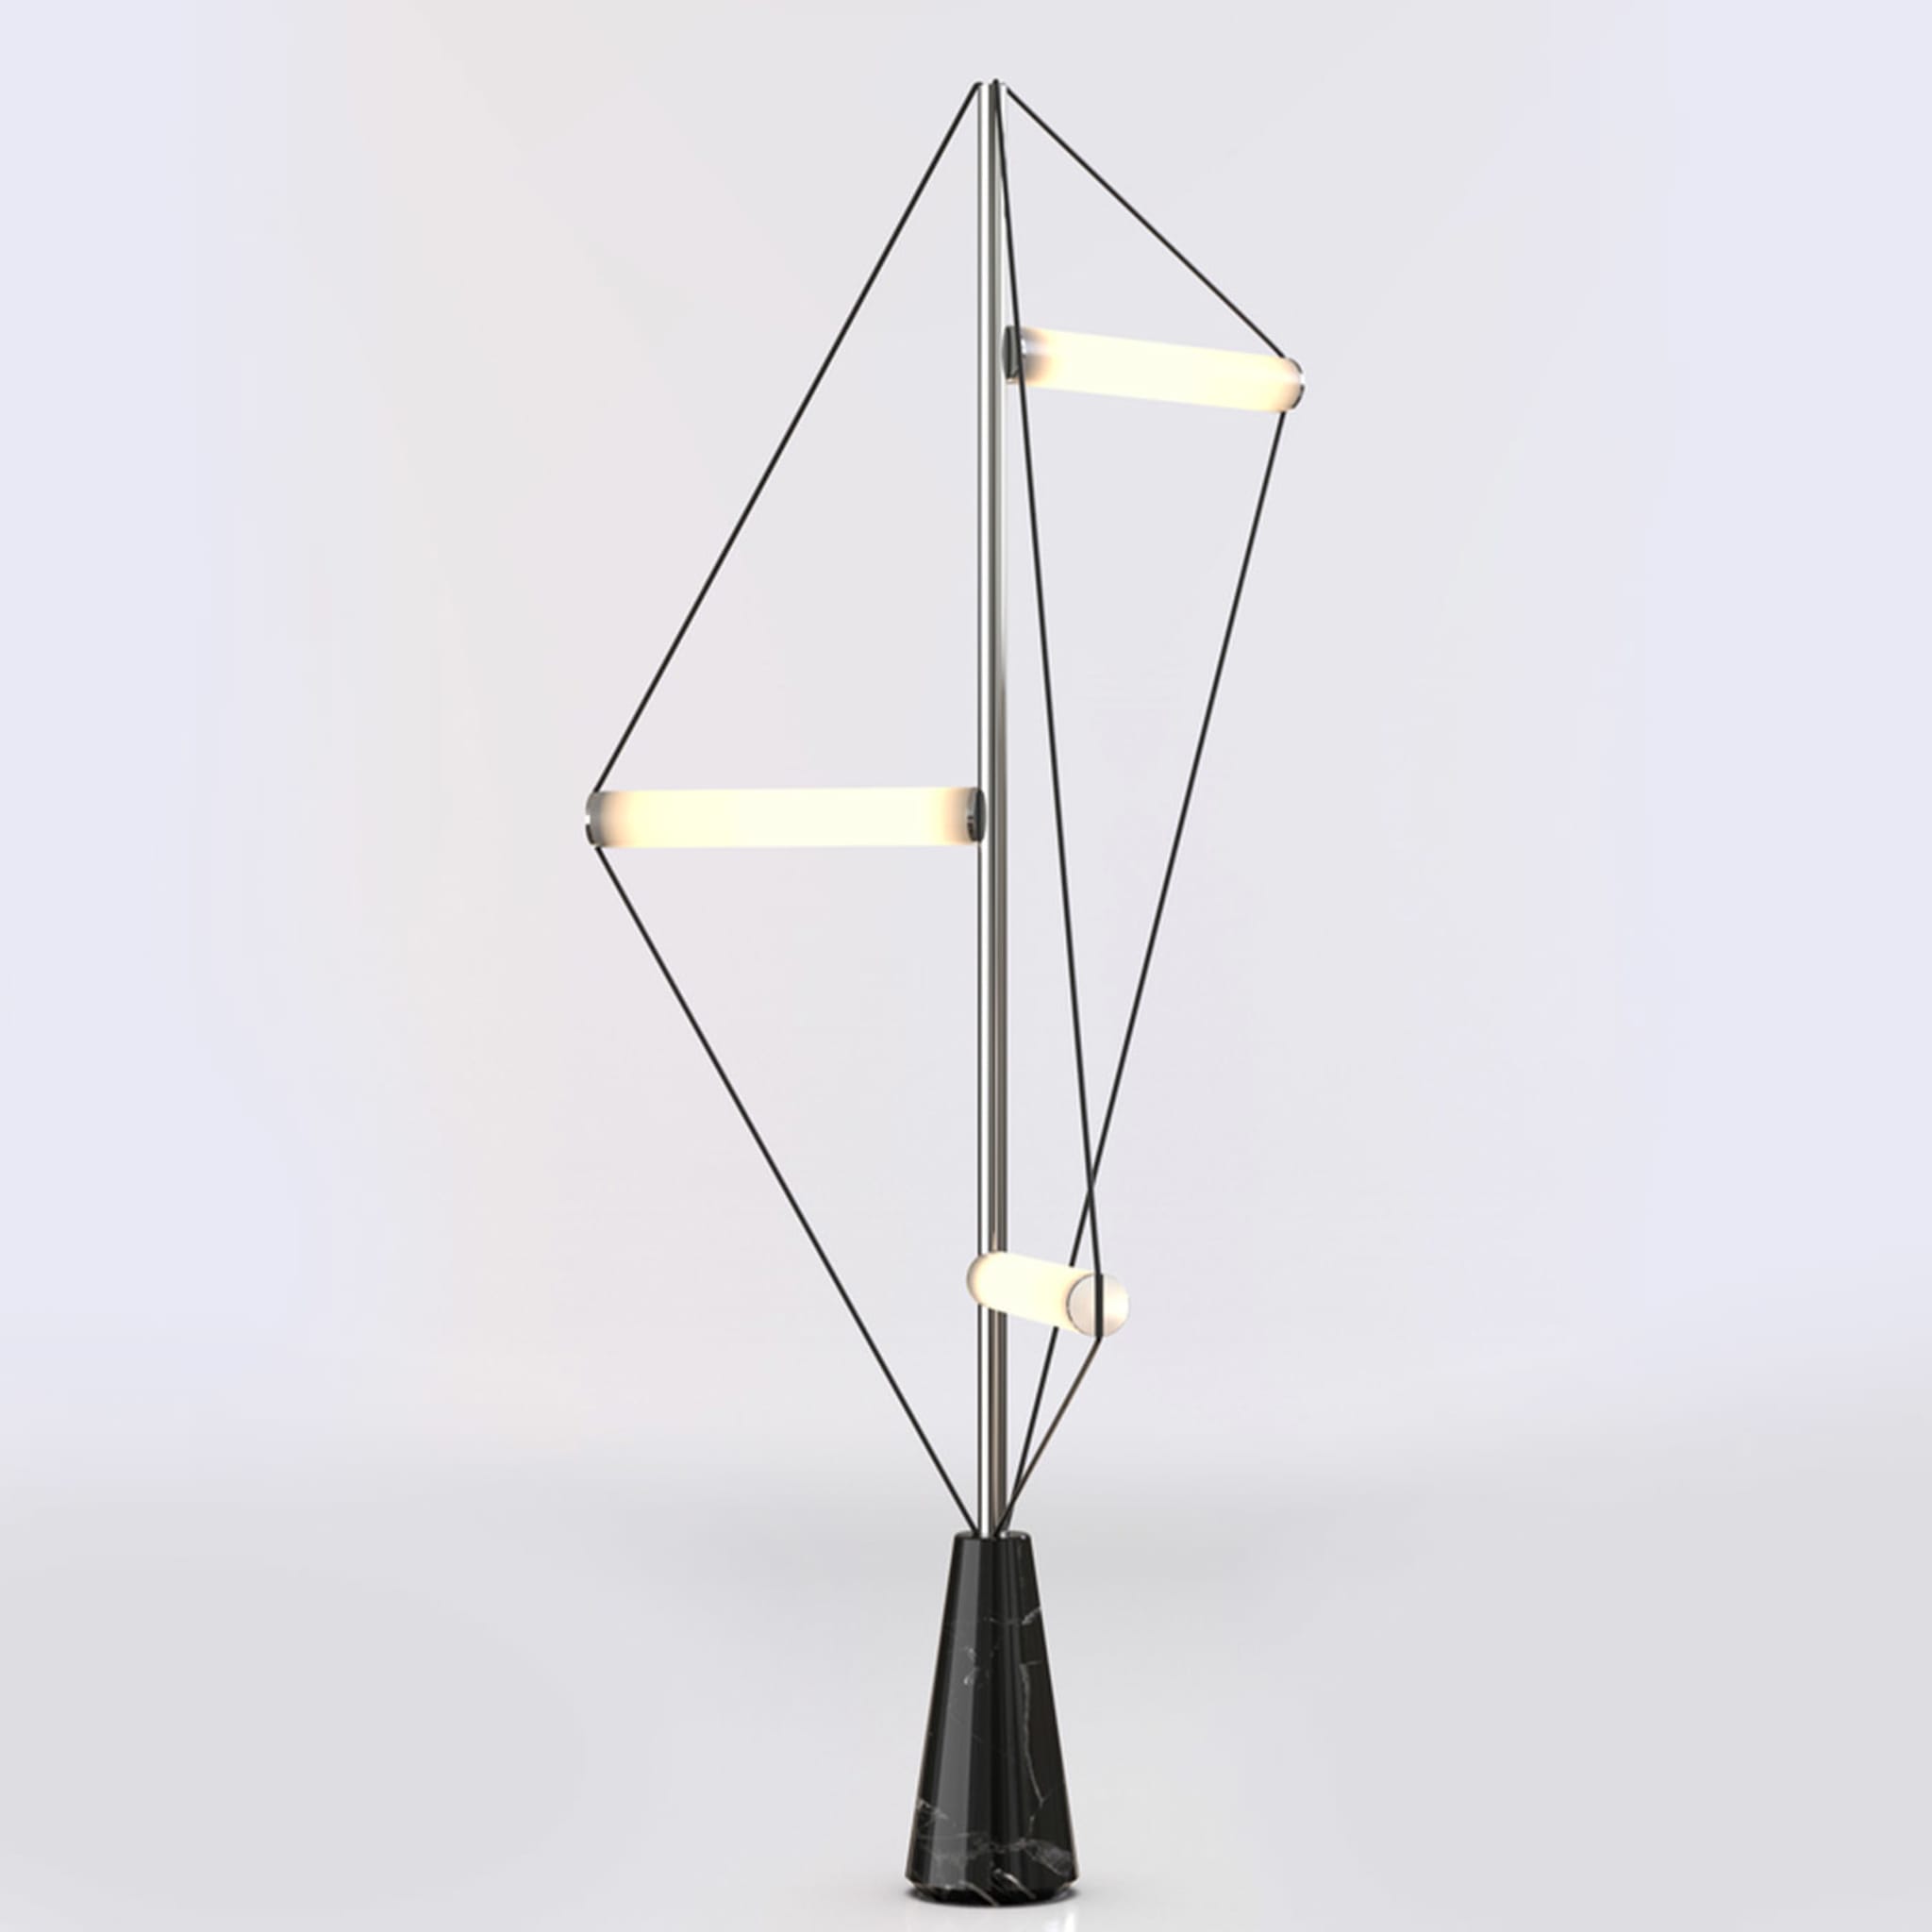 Ed047 Chrome Floor Lamp with Black Base - Alternative view 1